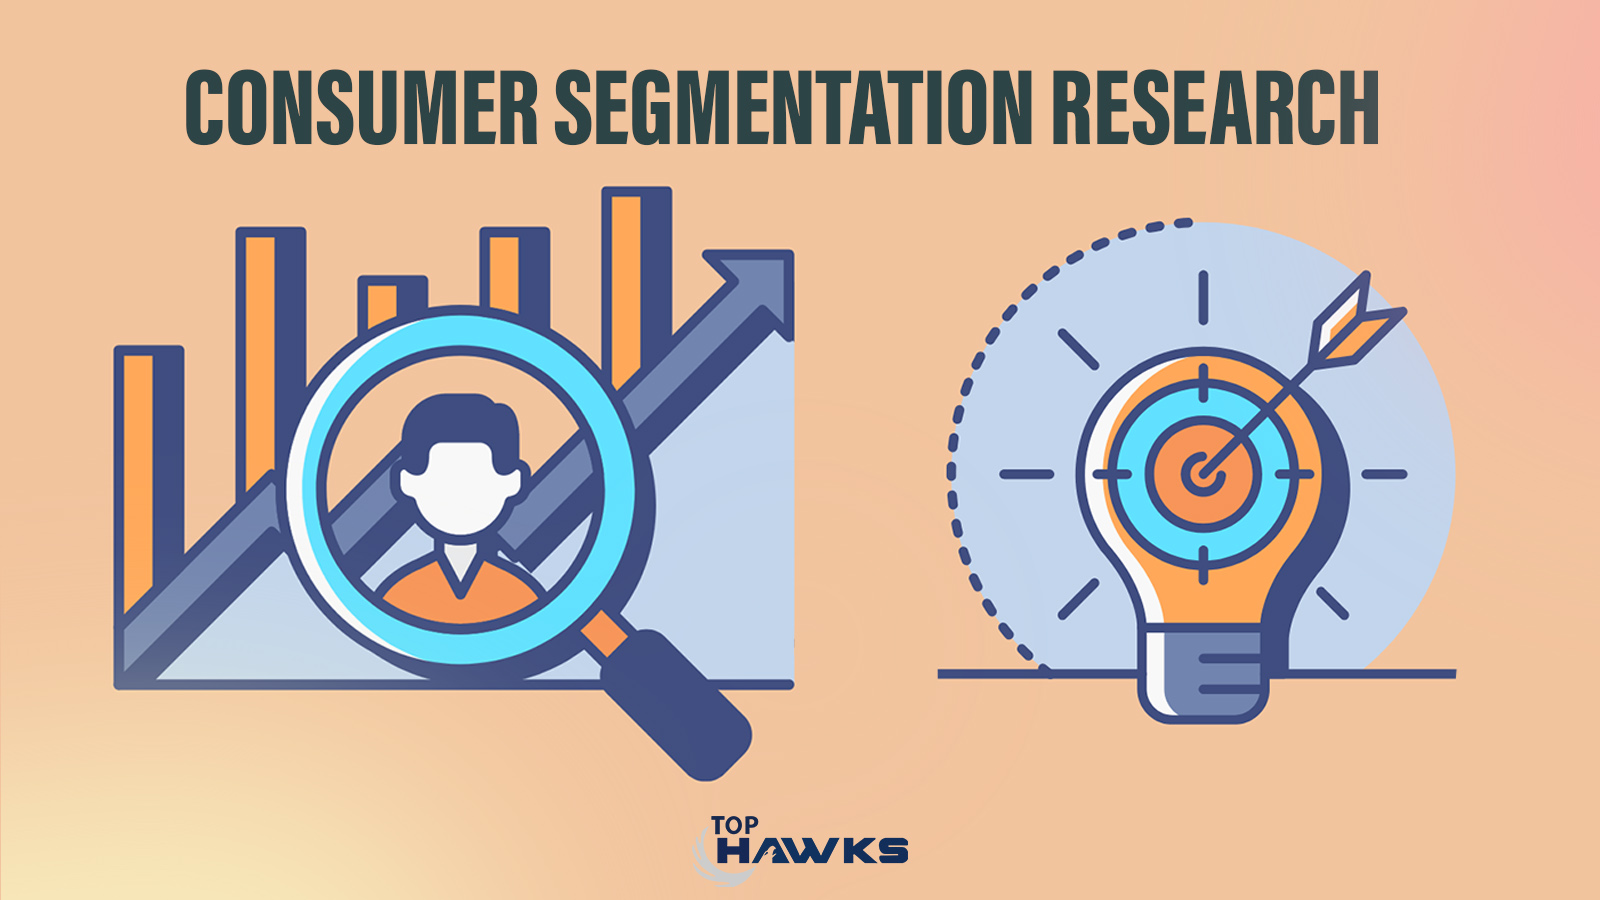 Image depicting Consumer Segmentation Research